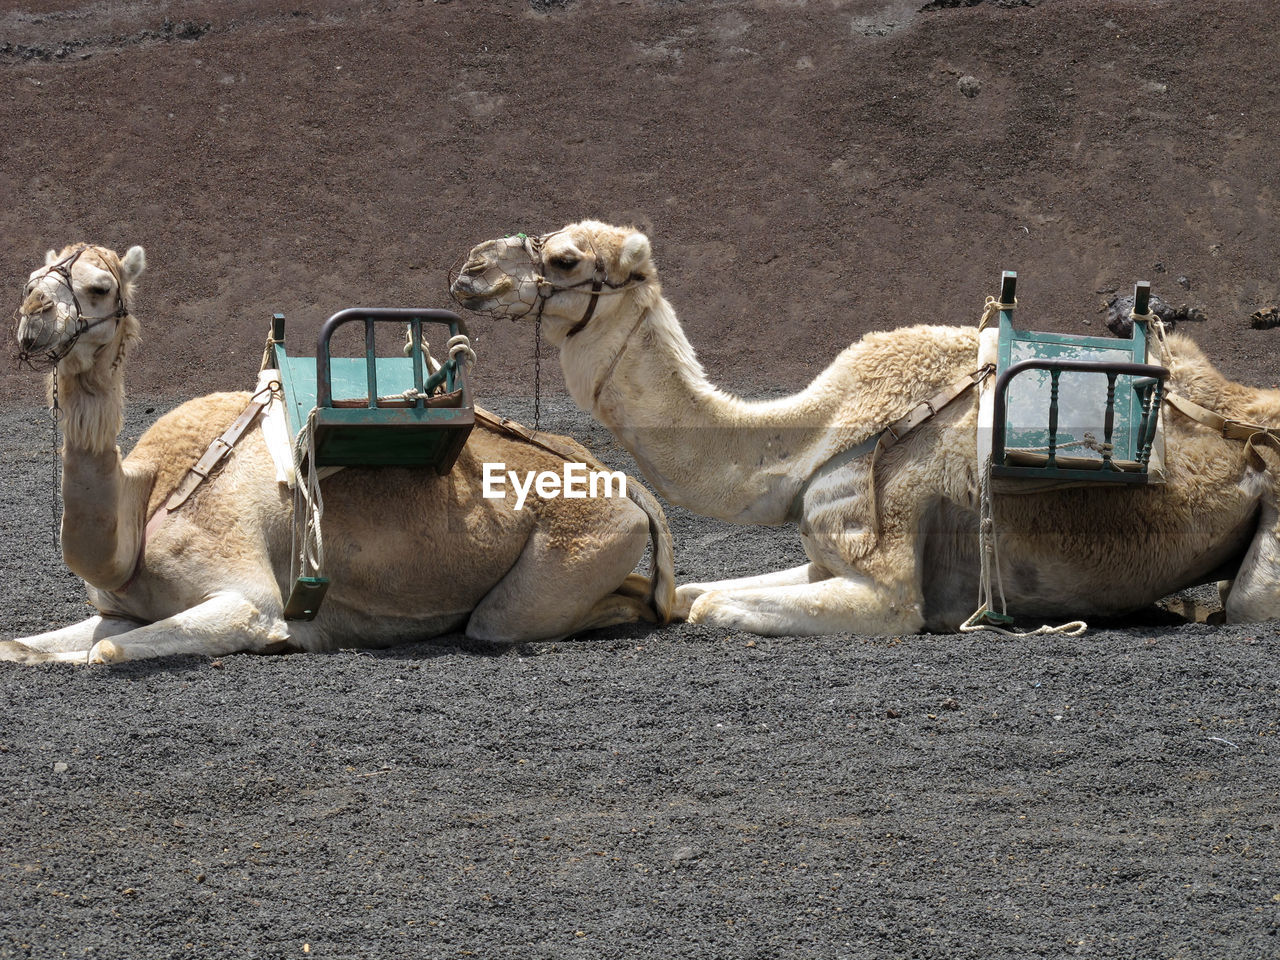 Two camels sat in desert